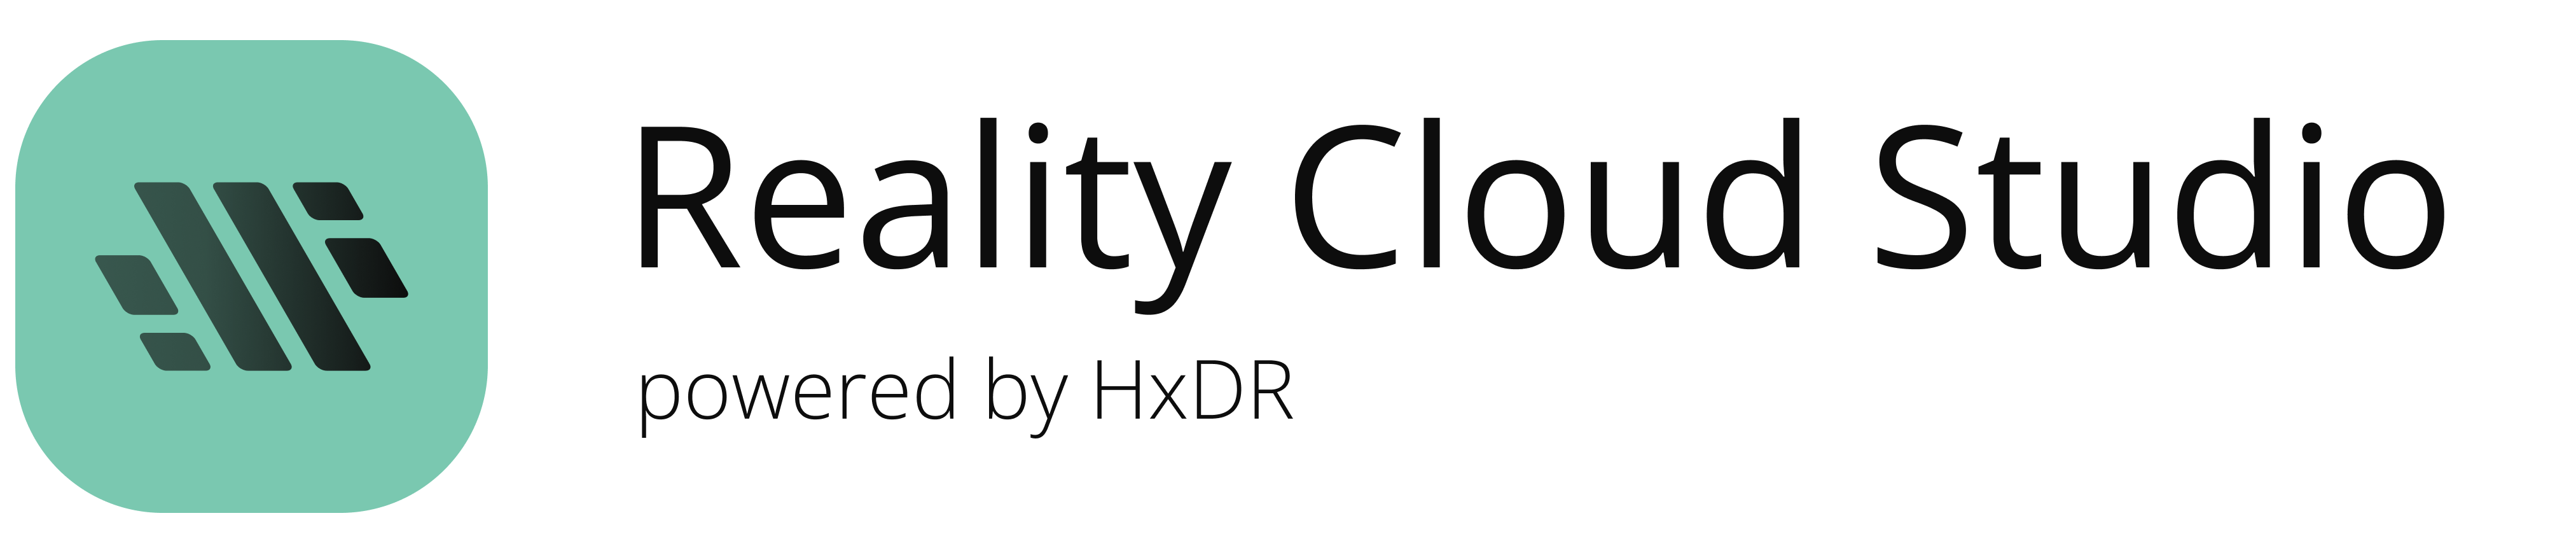 Reality Cloud Studio, powered by HxDR Logo